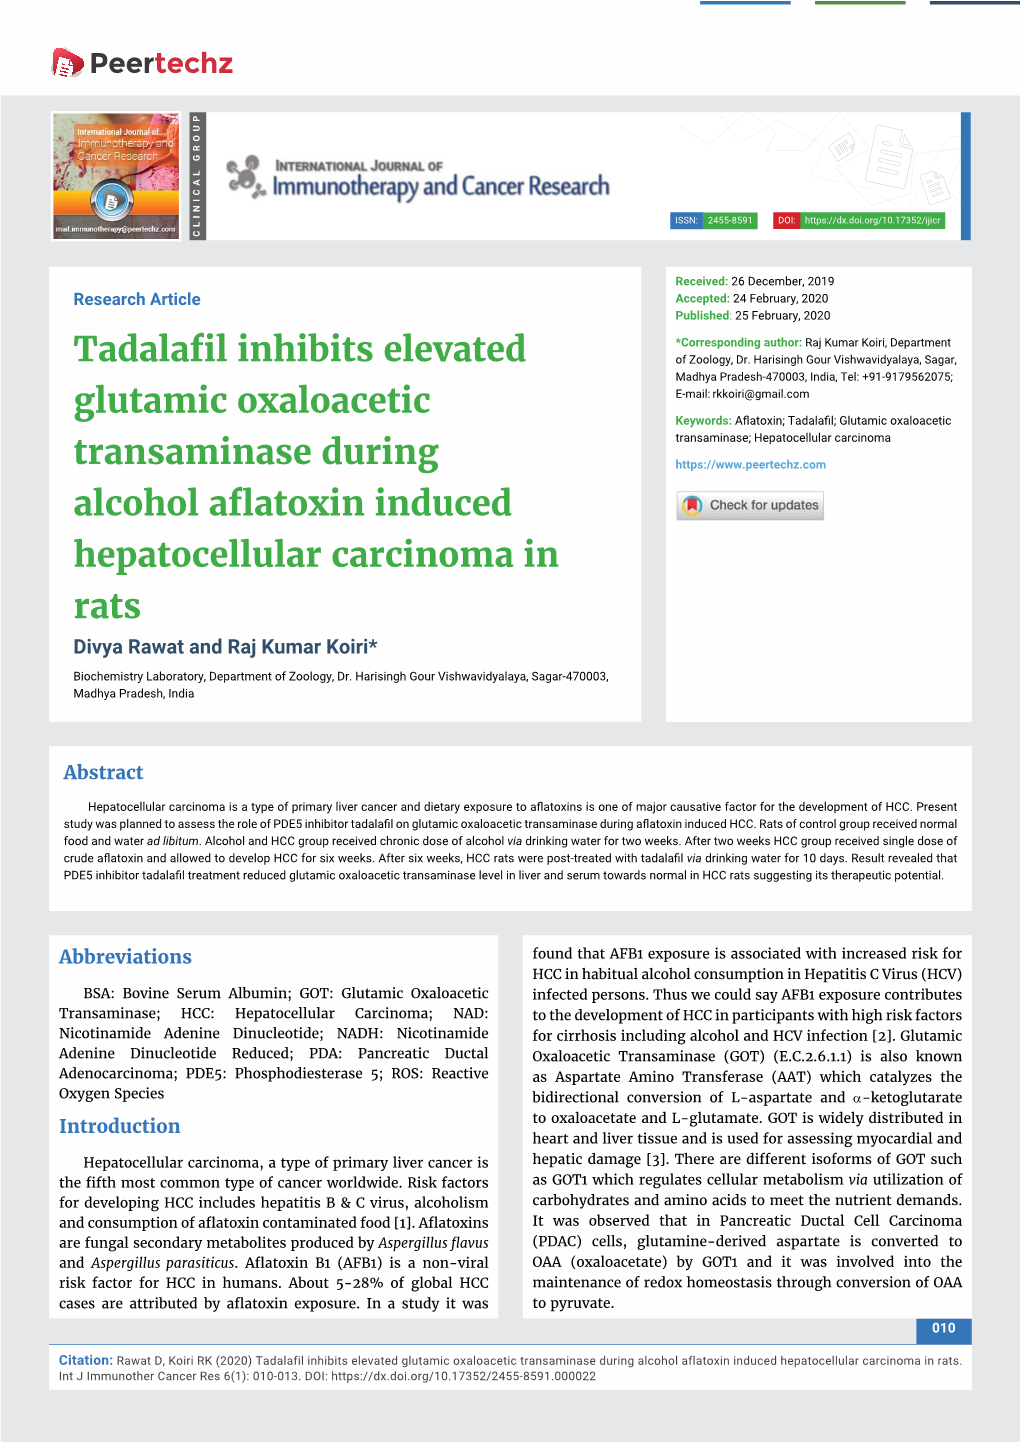 Tadalafil Inhibits Elevated Glutamic Oxaloacetic Transaminase During Alcohol Aflatoxin Induced Hepatocellular Carcinoma in Rats